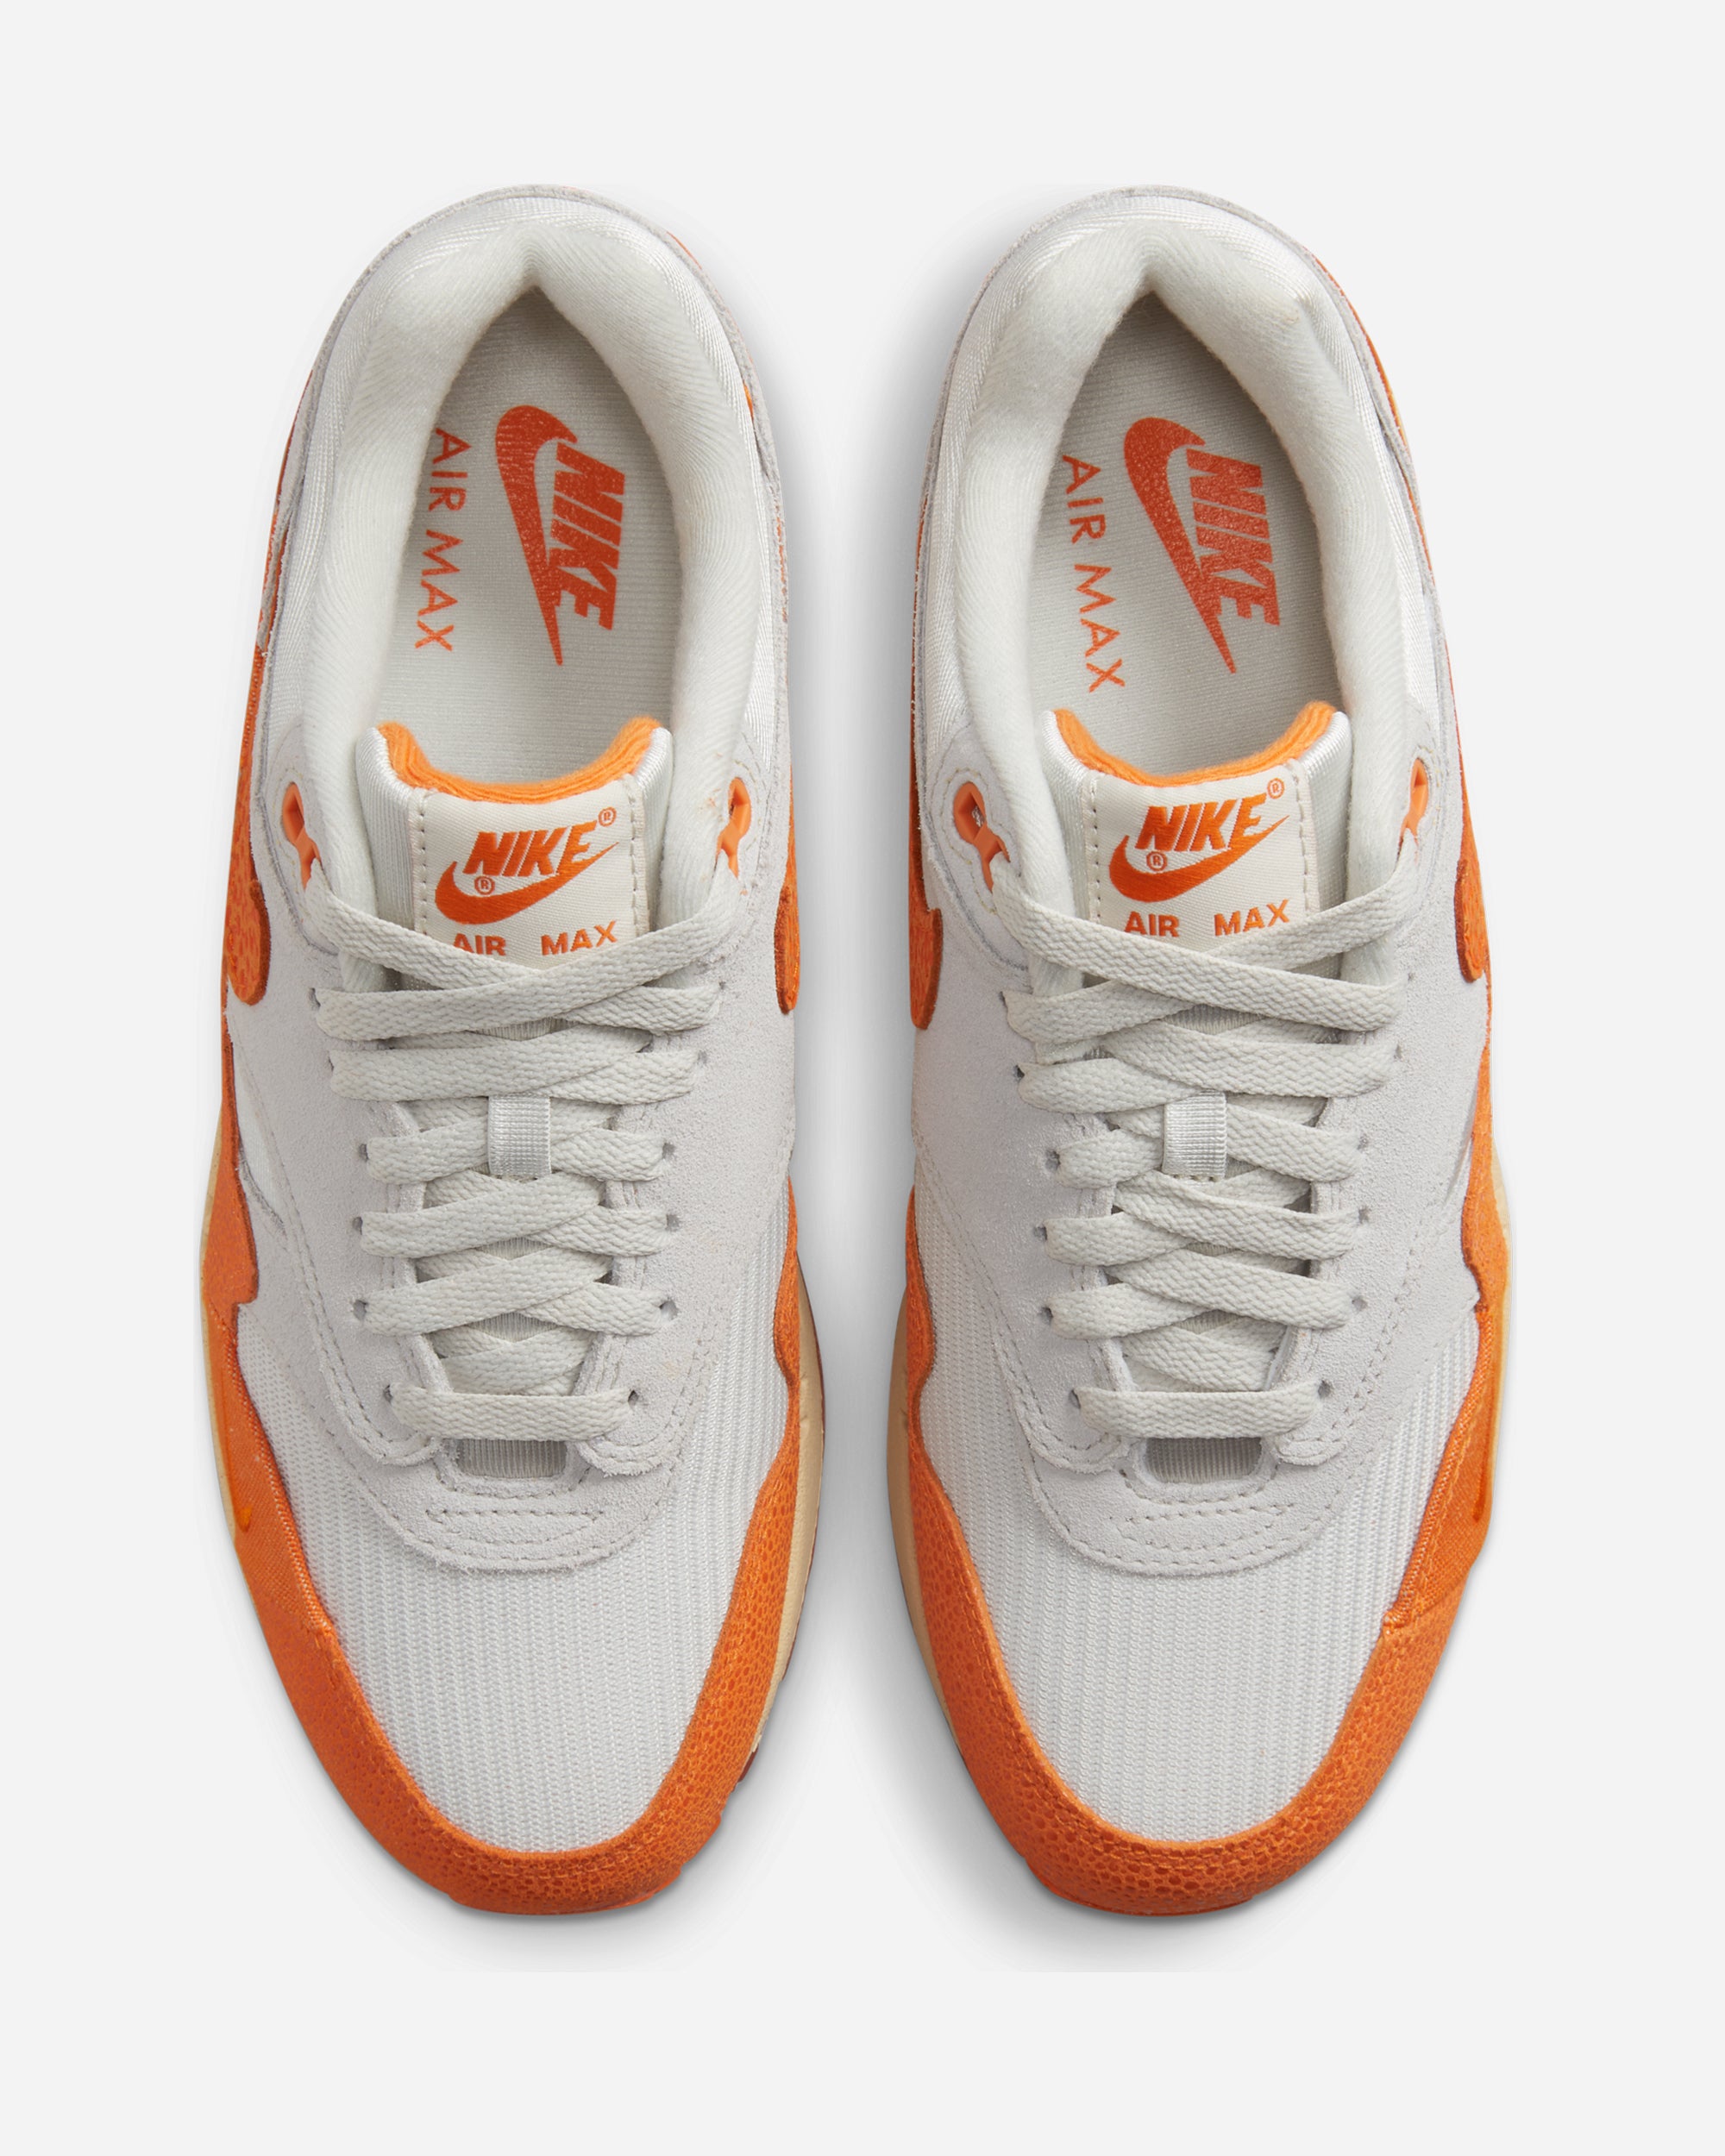 Nike Air Max 1 "Magma Orange" BONE/MAGMA ORANGE-NEUTRAL GREY DZ4709-001